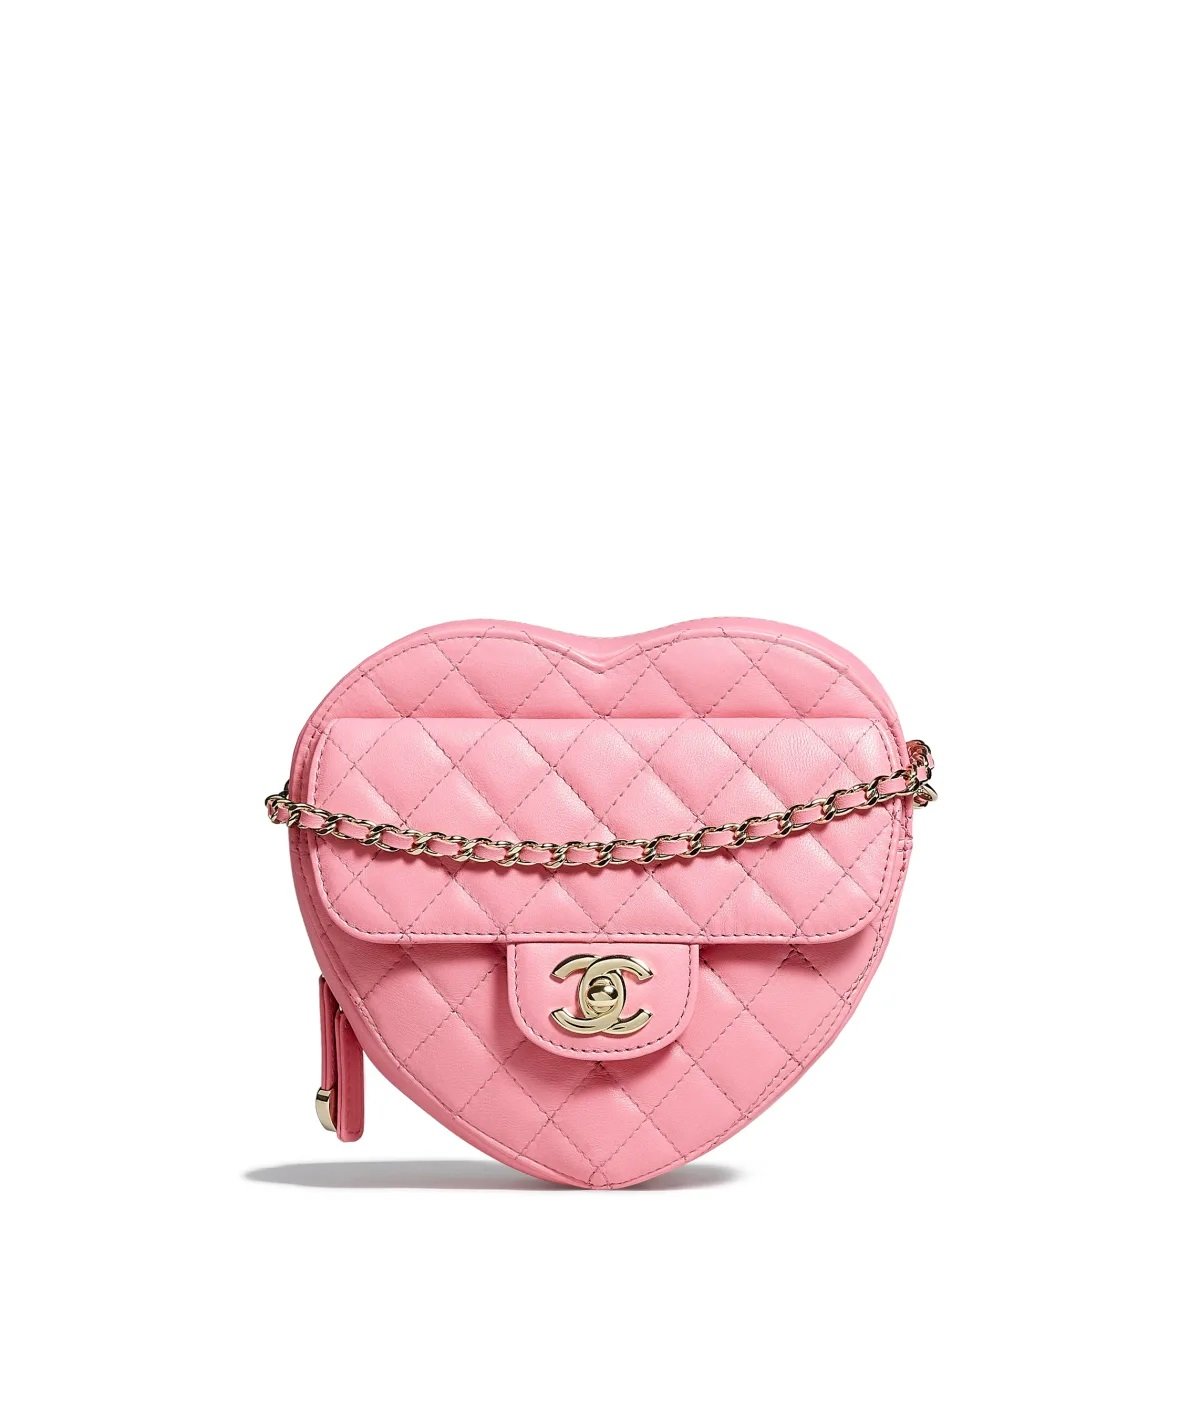 Chanel heart bag and LV shirt☀️ What's app for assistance +44 7946 132691📲  📸 @lenaterlutter #personalshopperlondon #personalshopping…